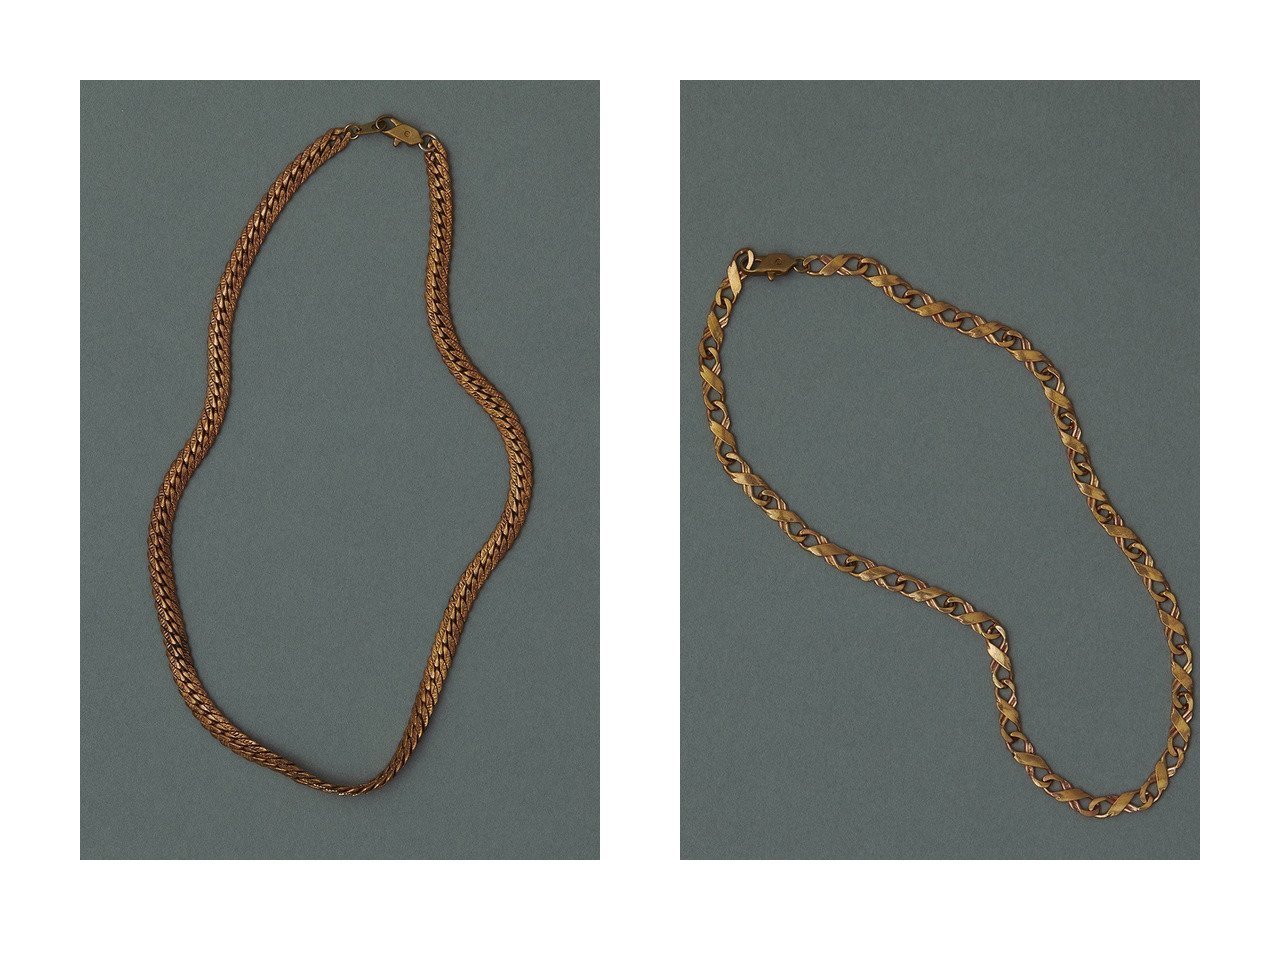 【Adlin Hue/アドリン ヒュー】のVintage Love X Chain Choker&Vintage Flat Textured Snake Chain Necklace 【アクセサリー】おすすめ！人気、トレンド、レディースファッションの通販  おすすめ人気トレンドファッション通販アイテム インテリア・キッズ・メンズ・レディースファッション・服の通販 founy(ファニー) 　ファッション　Fashion　レディースファッション　WOMEN　ジュエリー　Jewelry　ネックレス　Necklaces　おすすめ　Recommend　ジュエリー　チェーン　テクスチャー　ネックレス　フラット　ヴィンテージ　再入荷　Restock/Back in Stock/Re Arrival　シルバー系　Silver　|ID:crp329100000121197